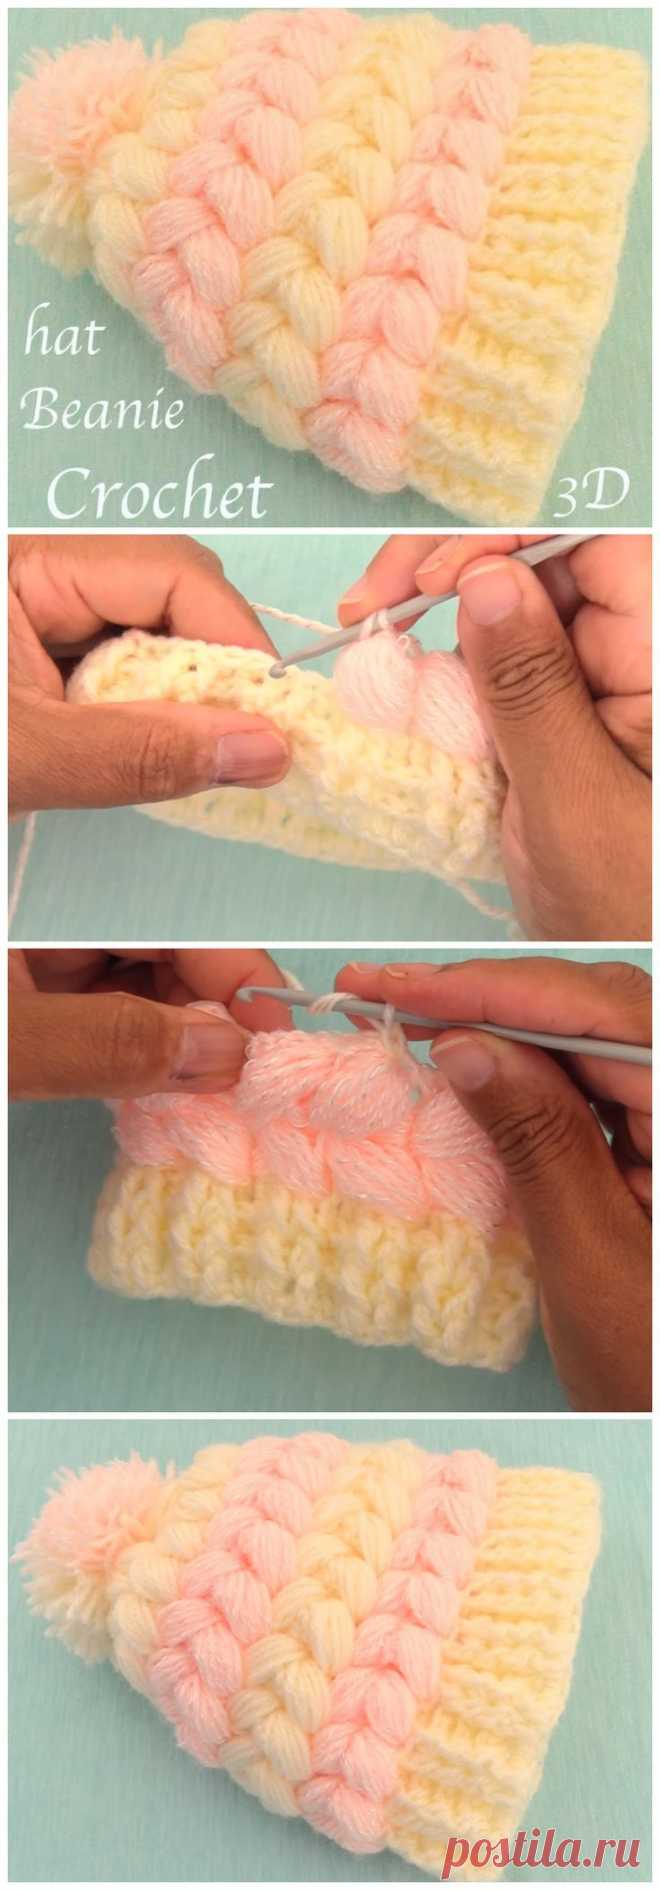 Crochet Puff Stitch 3D Beanie Hat  #3D #Beanie #Crochet #Hat #Puff #stitch #DIY